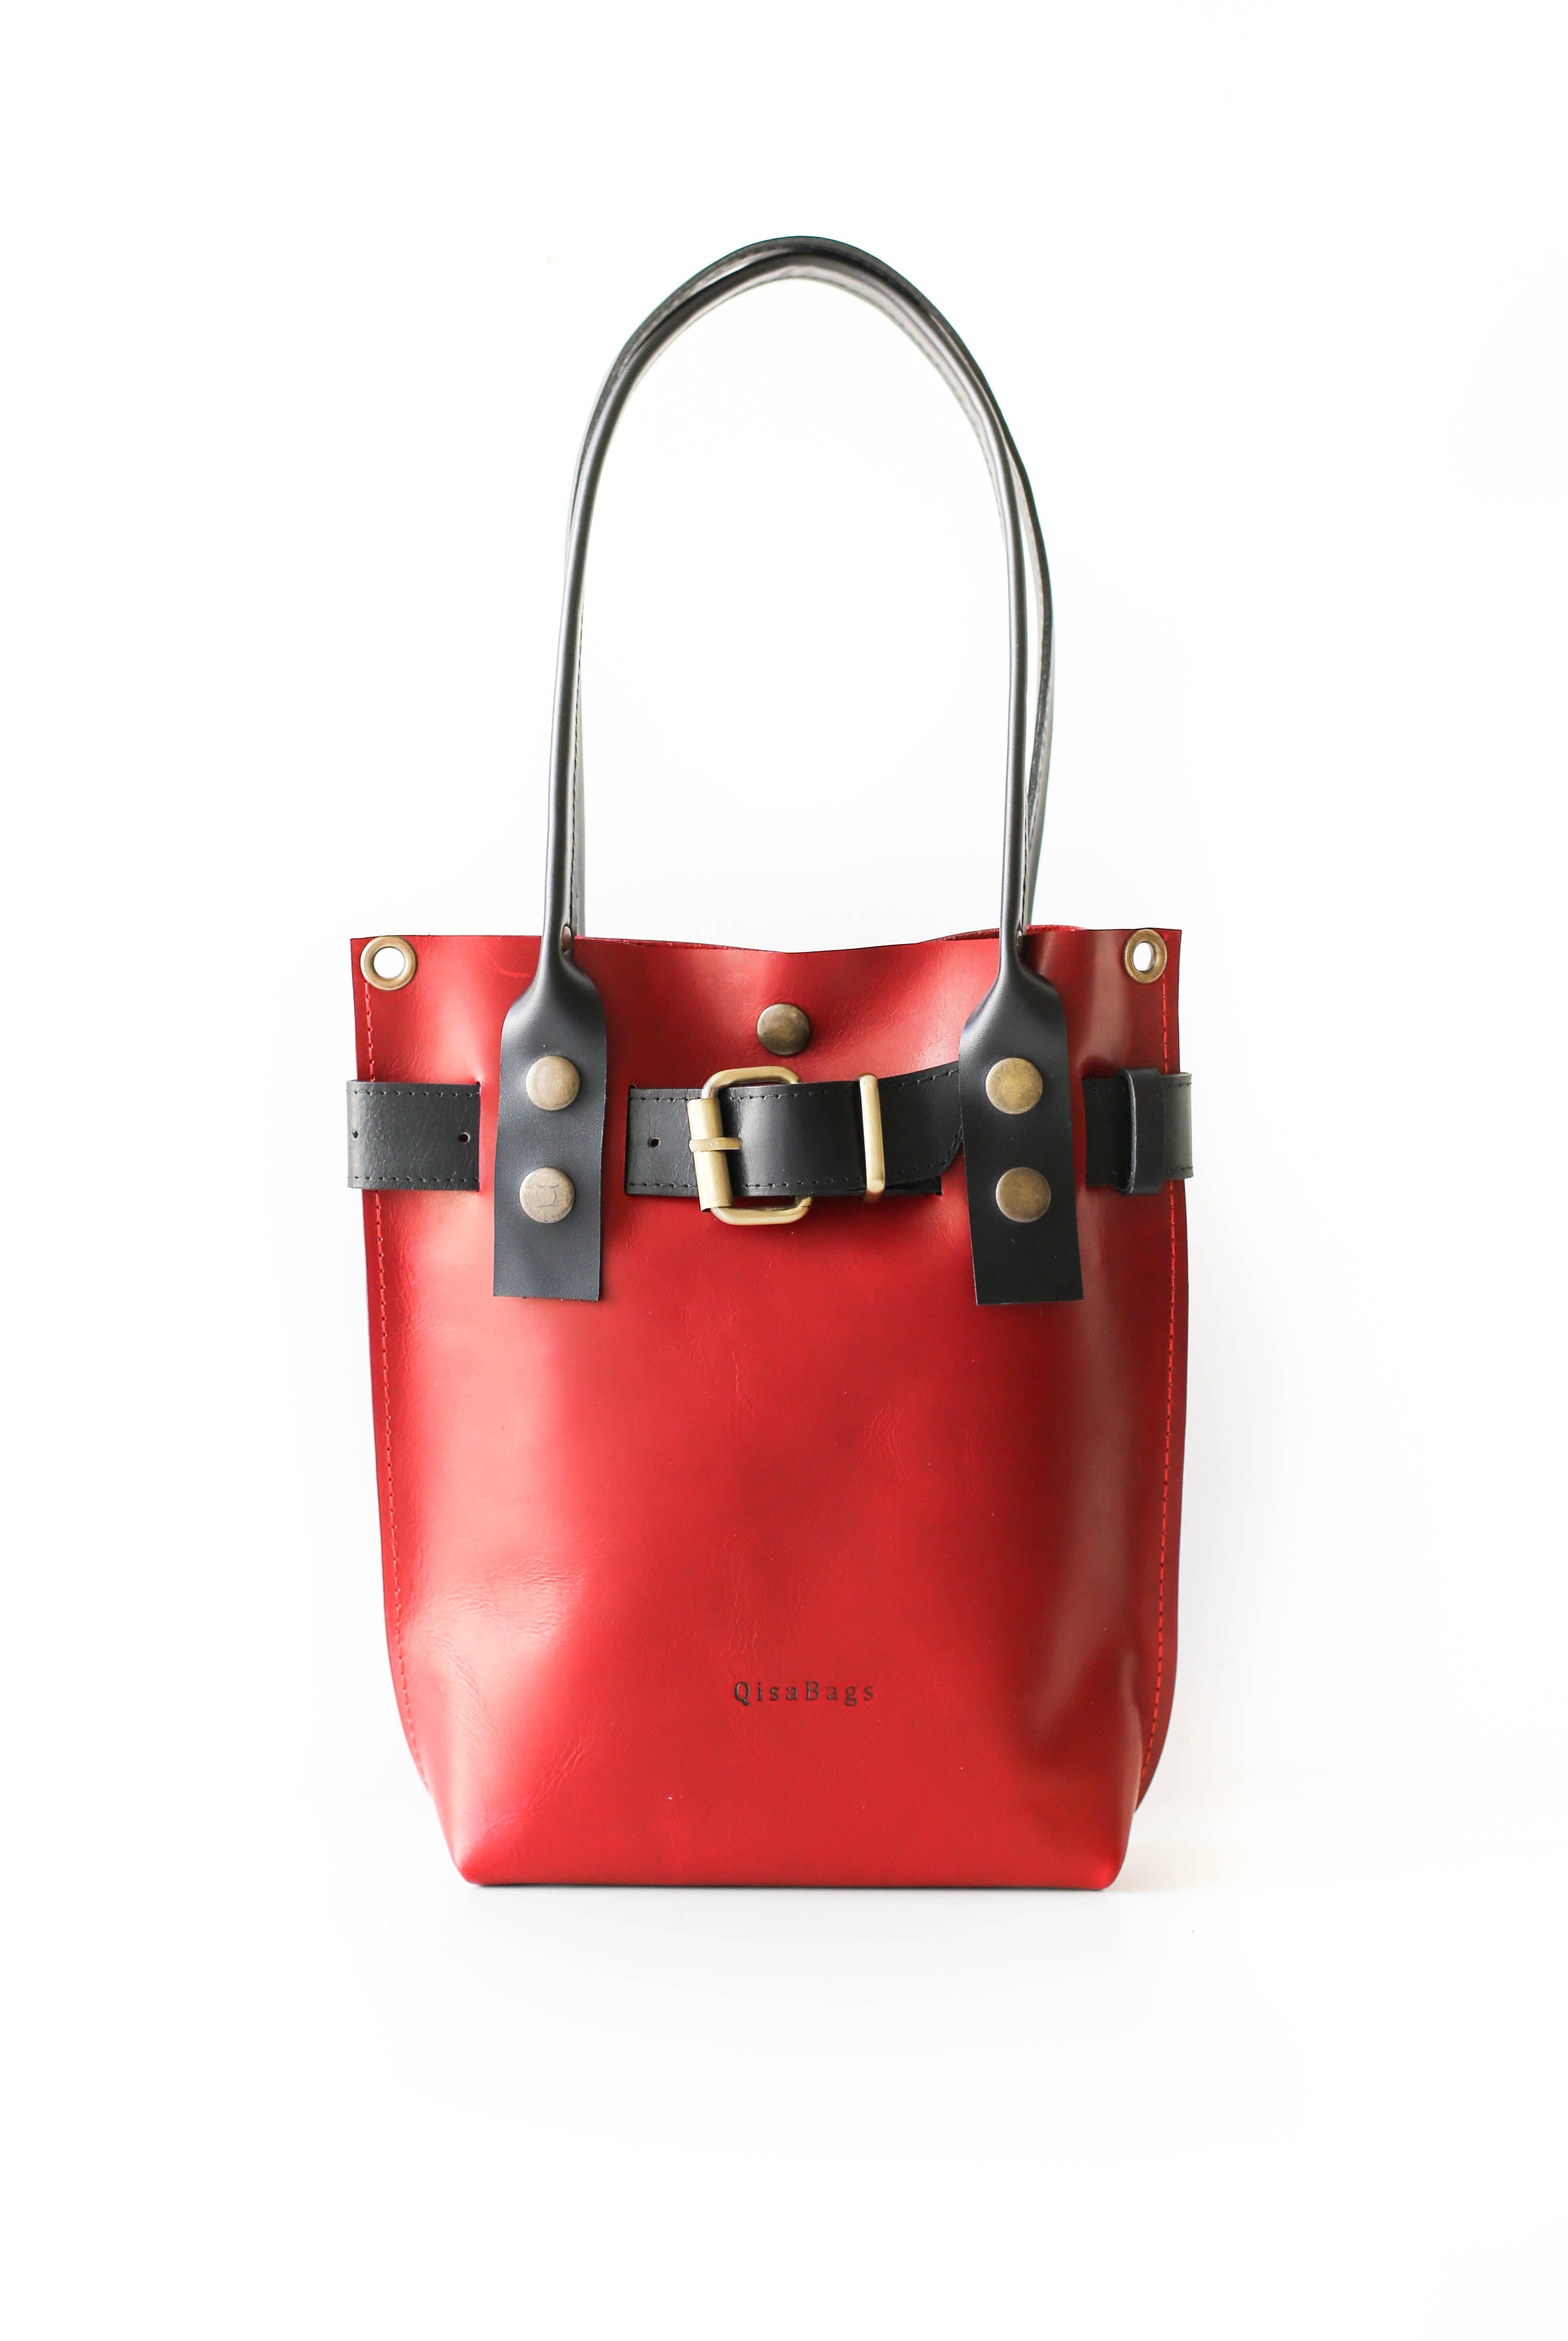 BURBERRY, Red Women's Handbag